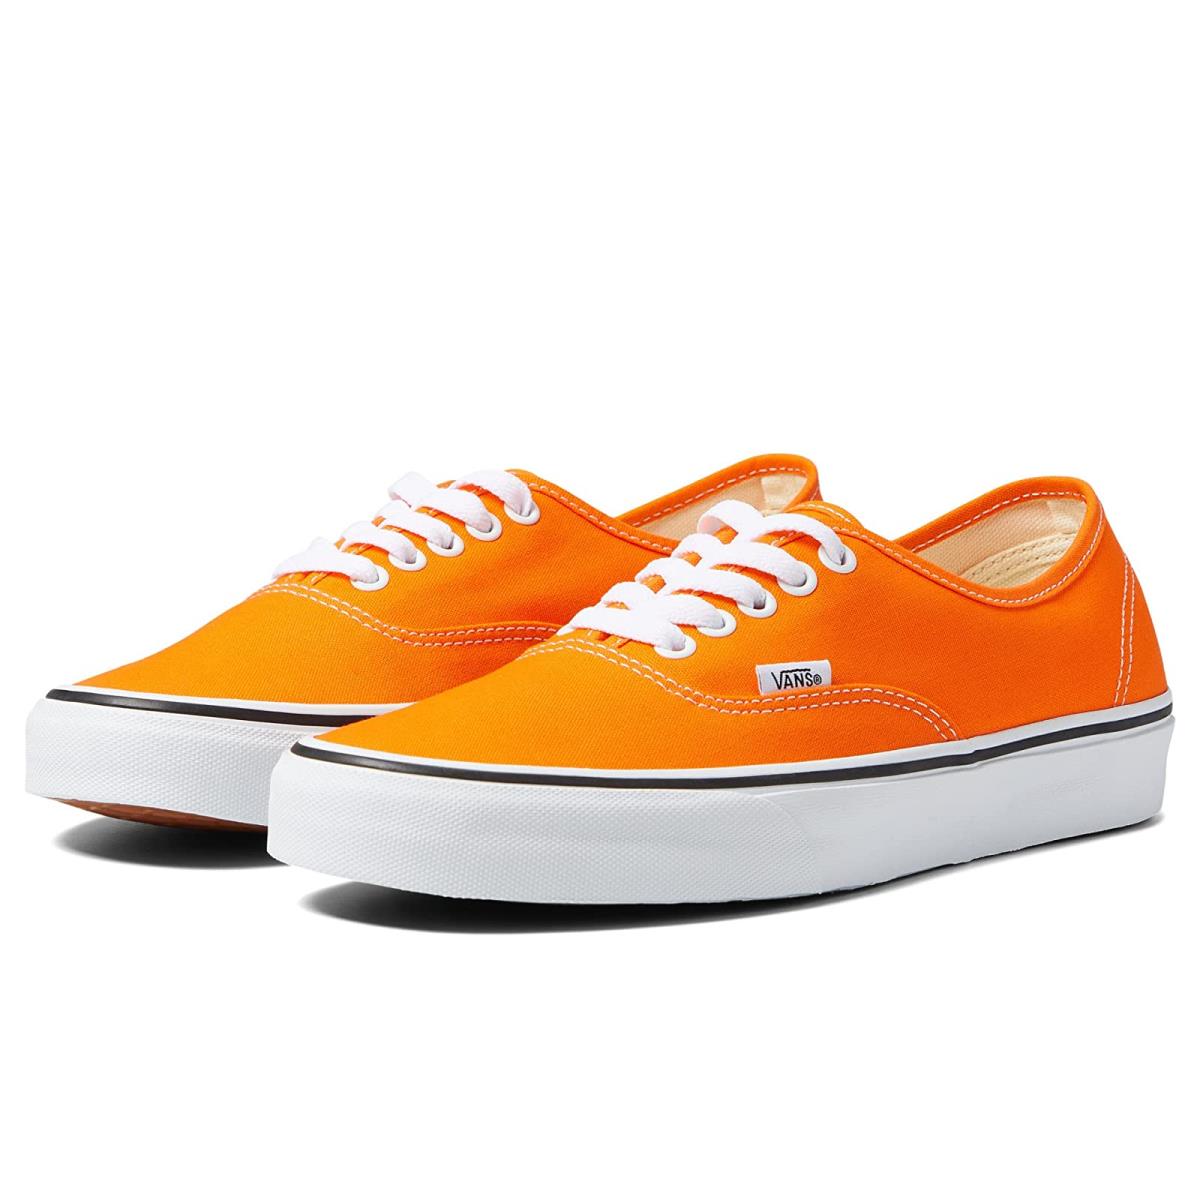 Unisex Sneakers Athletic Shoes Vans Orange Tiger/True White